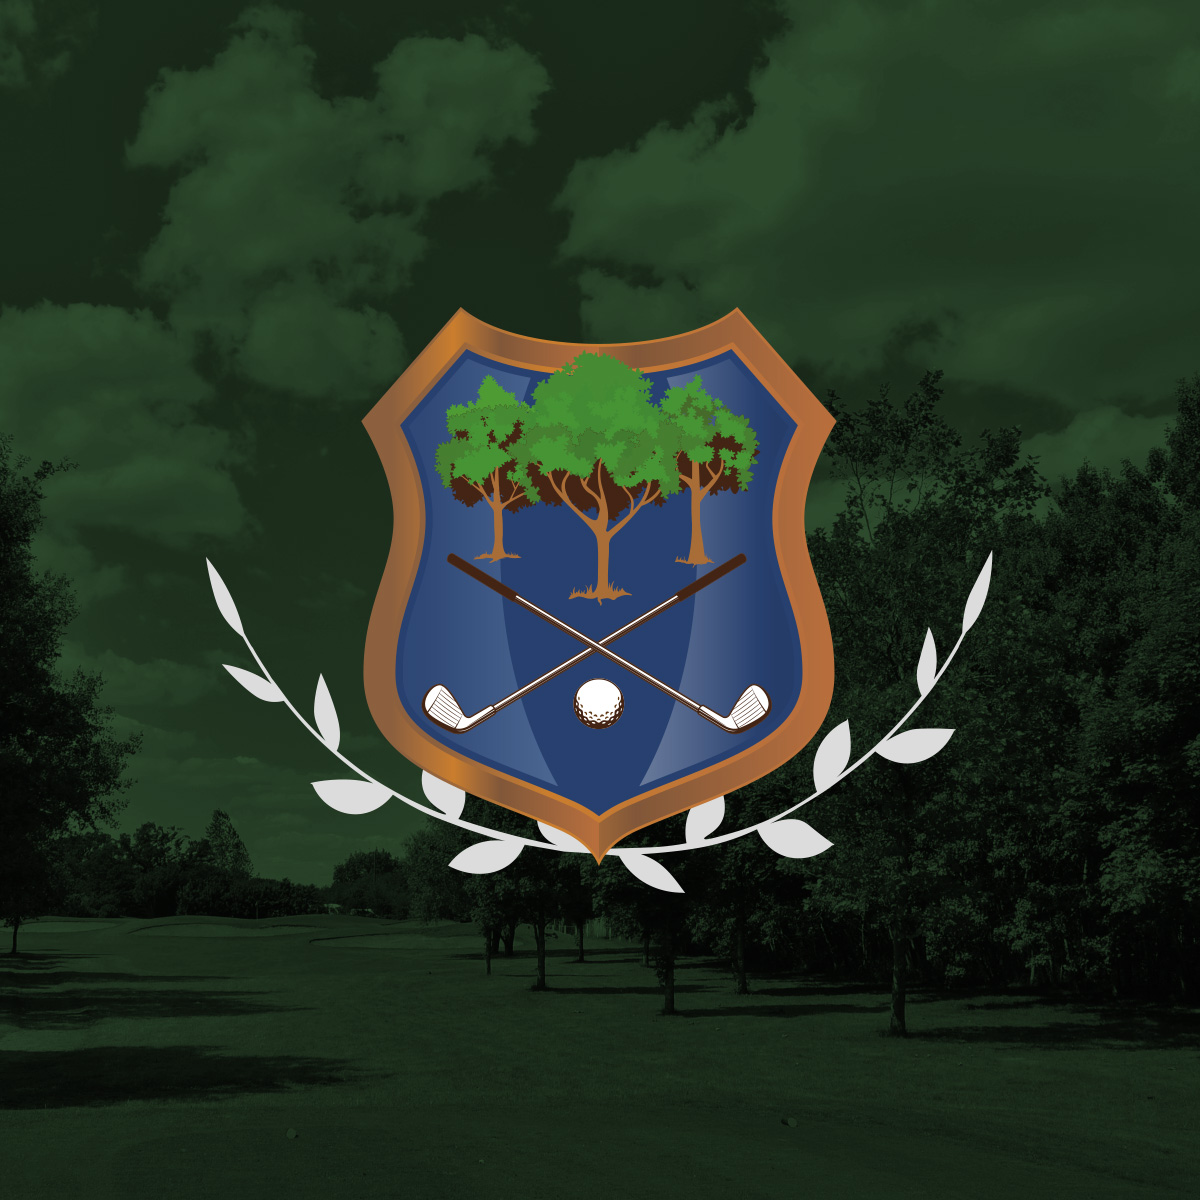 Lexdon Wood Golf Club